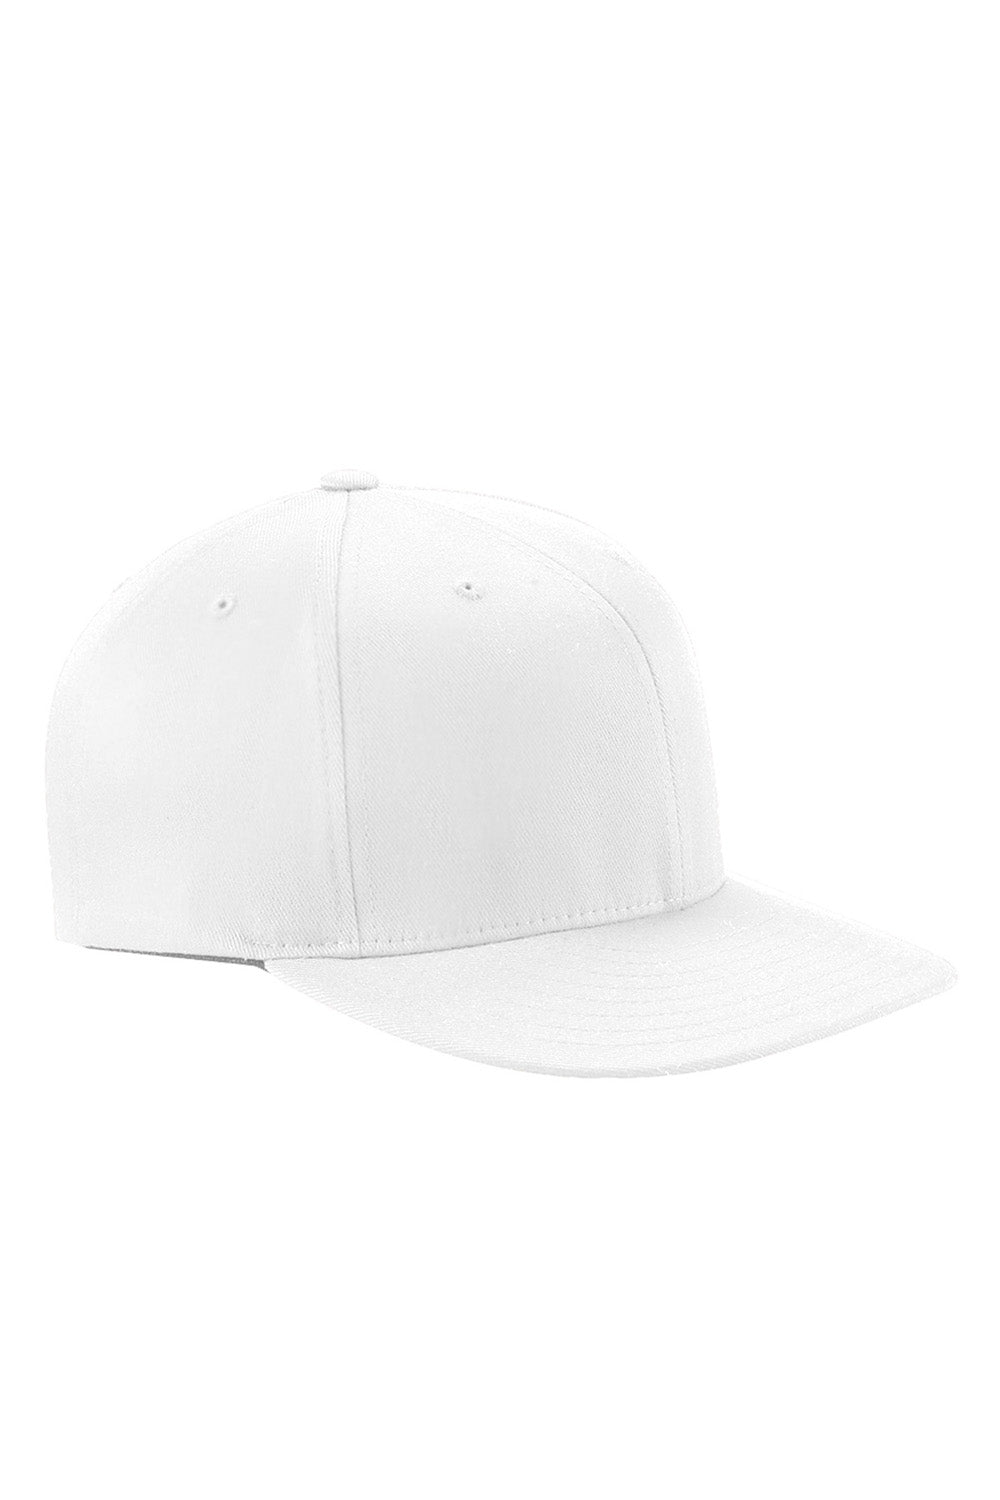 Flexfit 6297F Mens Stretch Fit Hat White Front